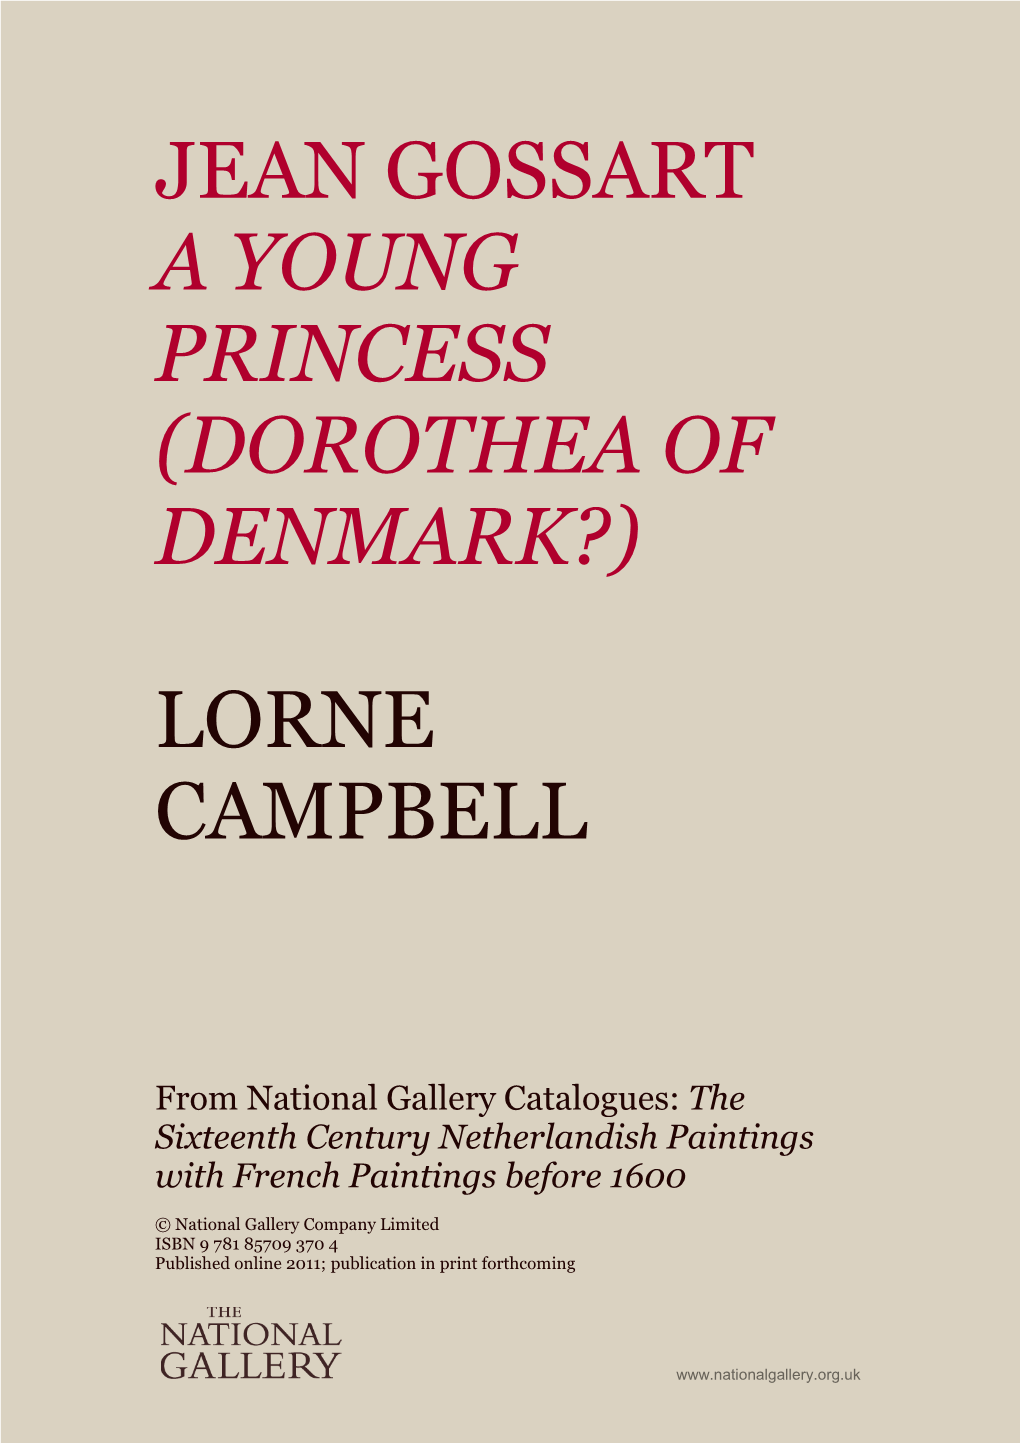 Jean Gossart, 'A Young Princess (Dorothea of Denmark?)' – Lorne